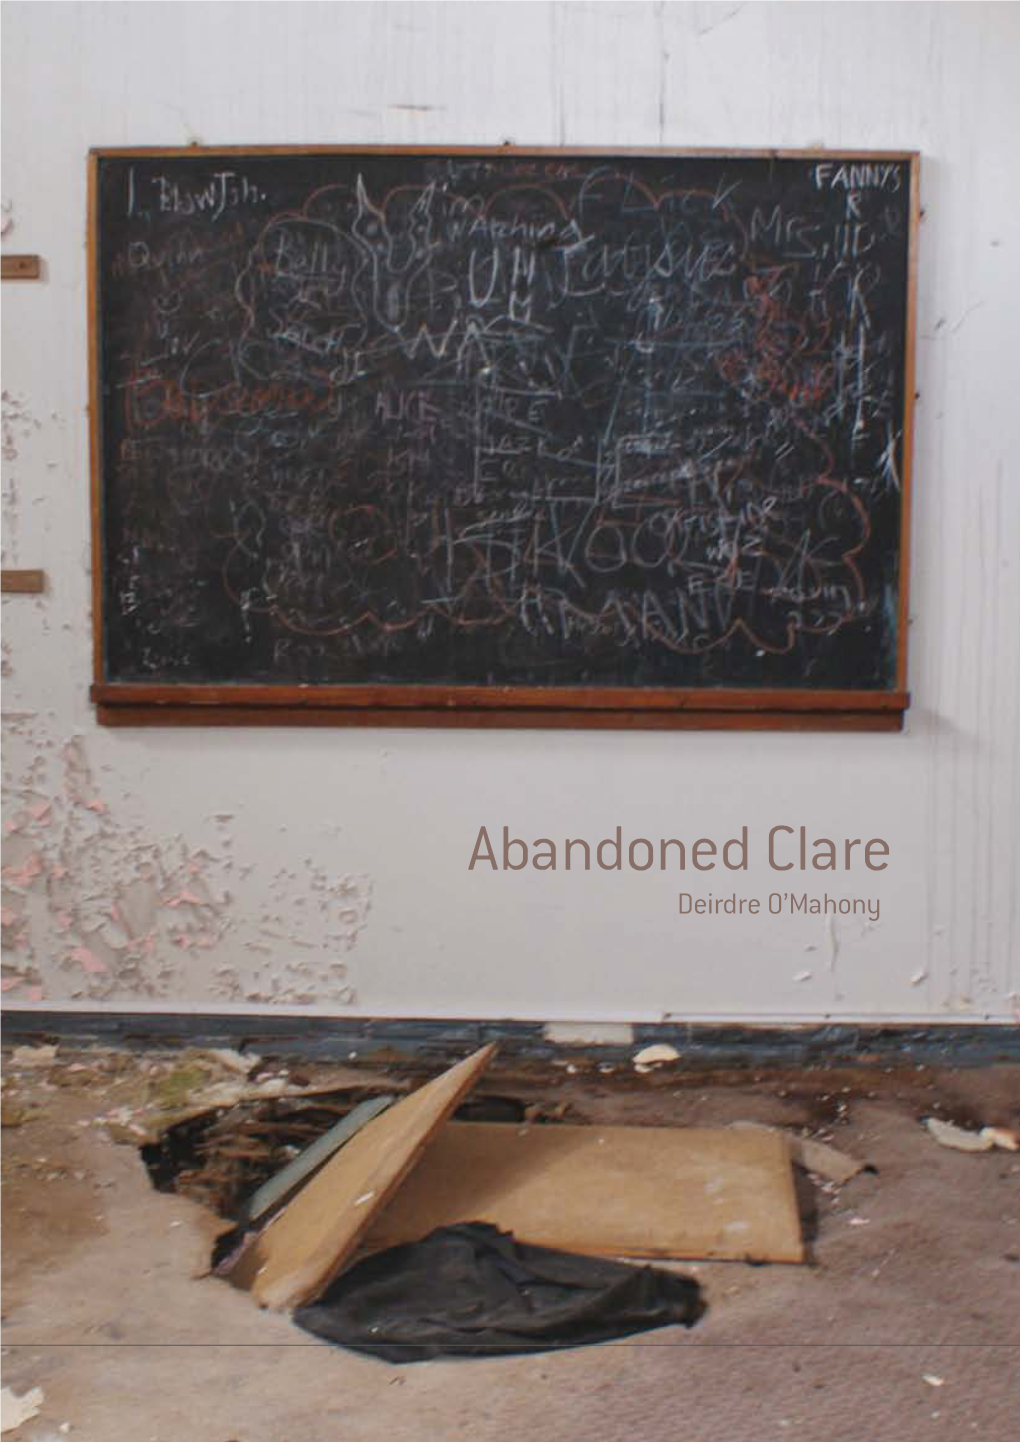 Abandoned Clare Deirdre O’Mahony Ndit Co Ions Nd a a P S P L I M E R